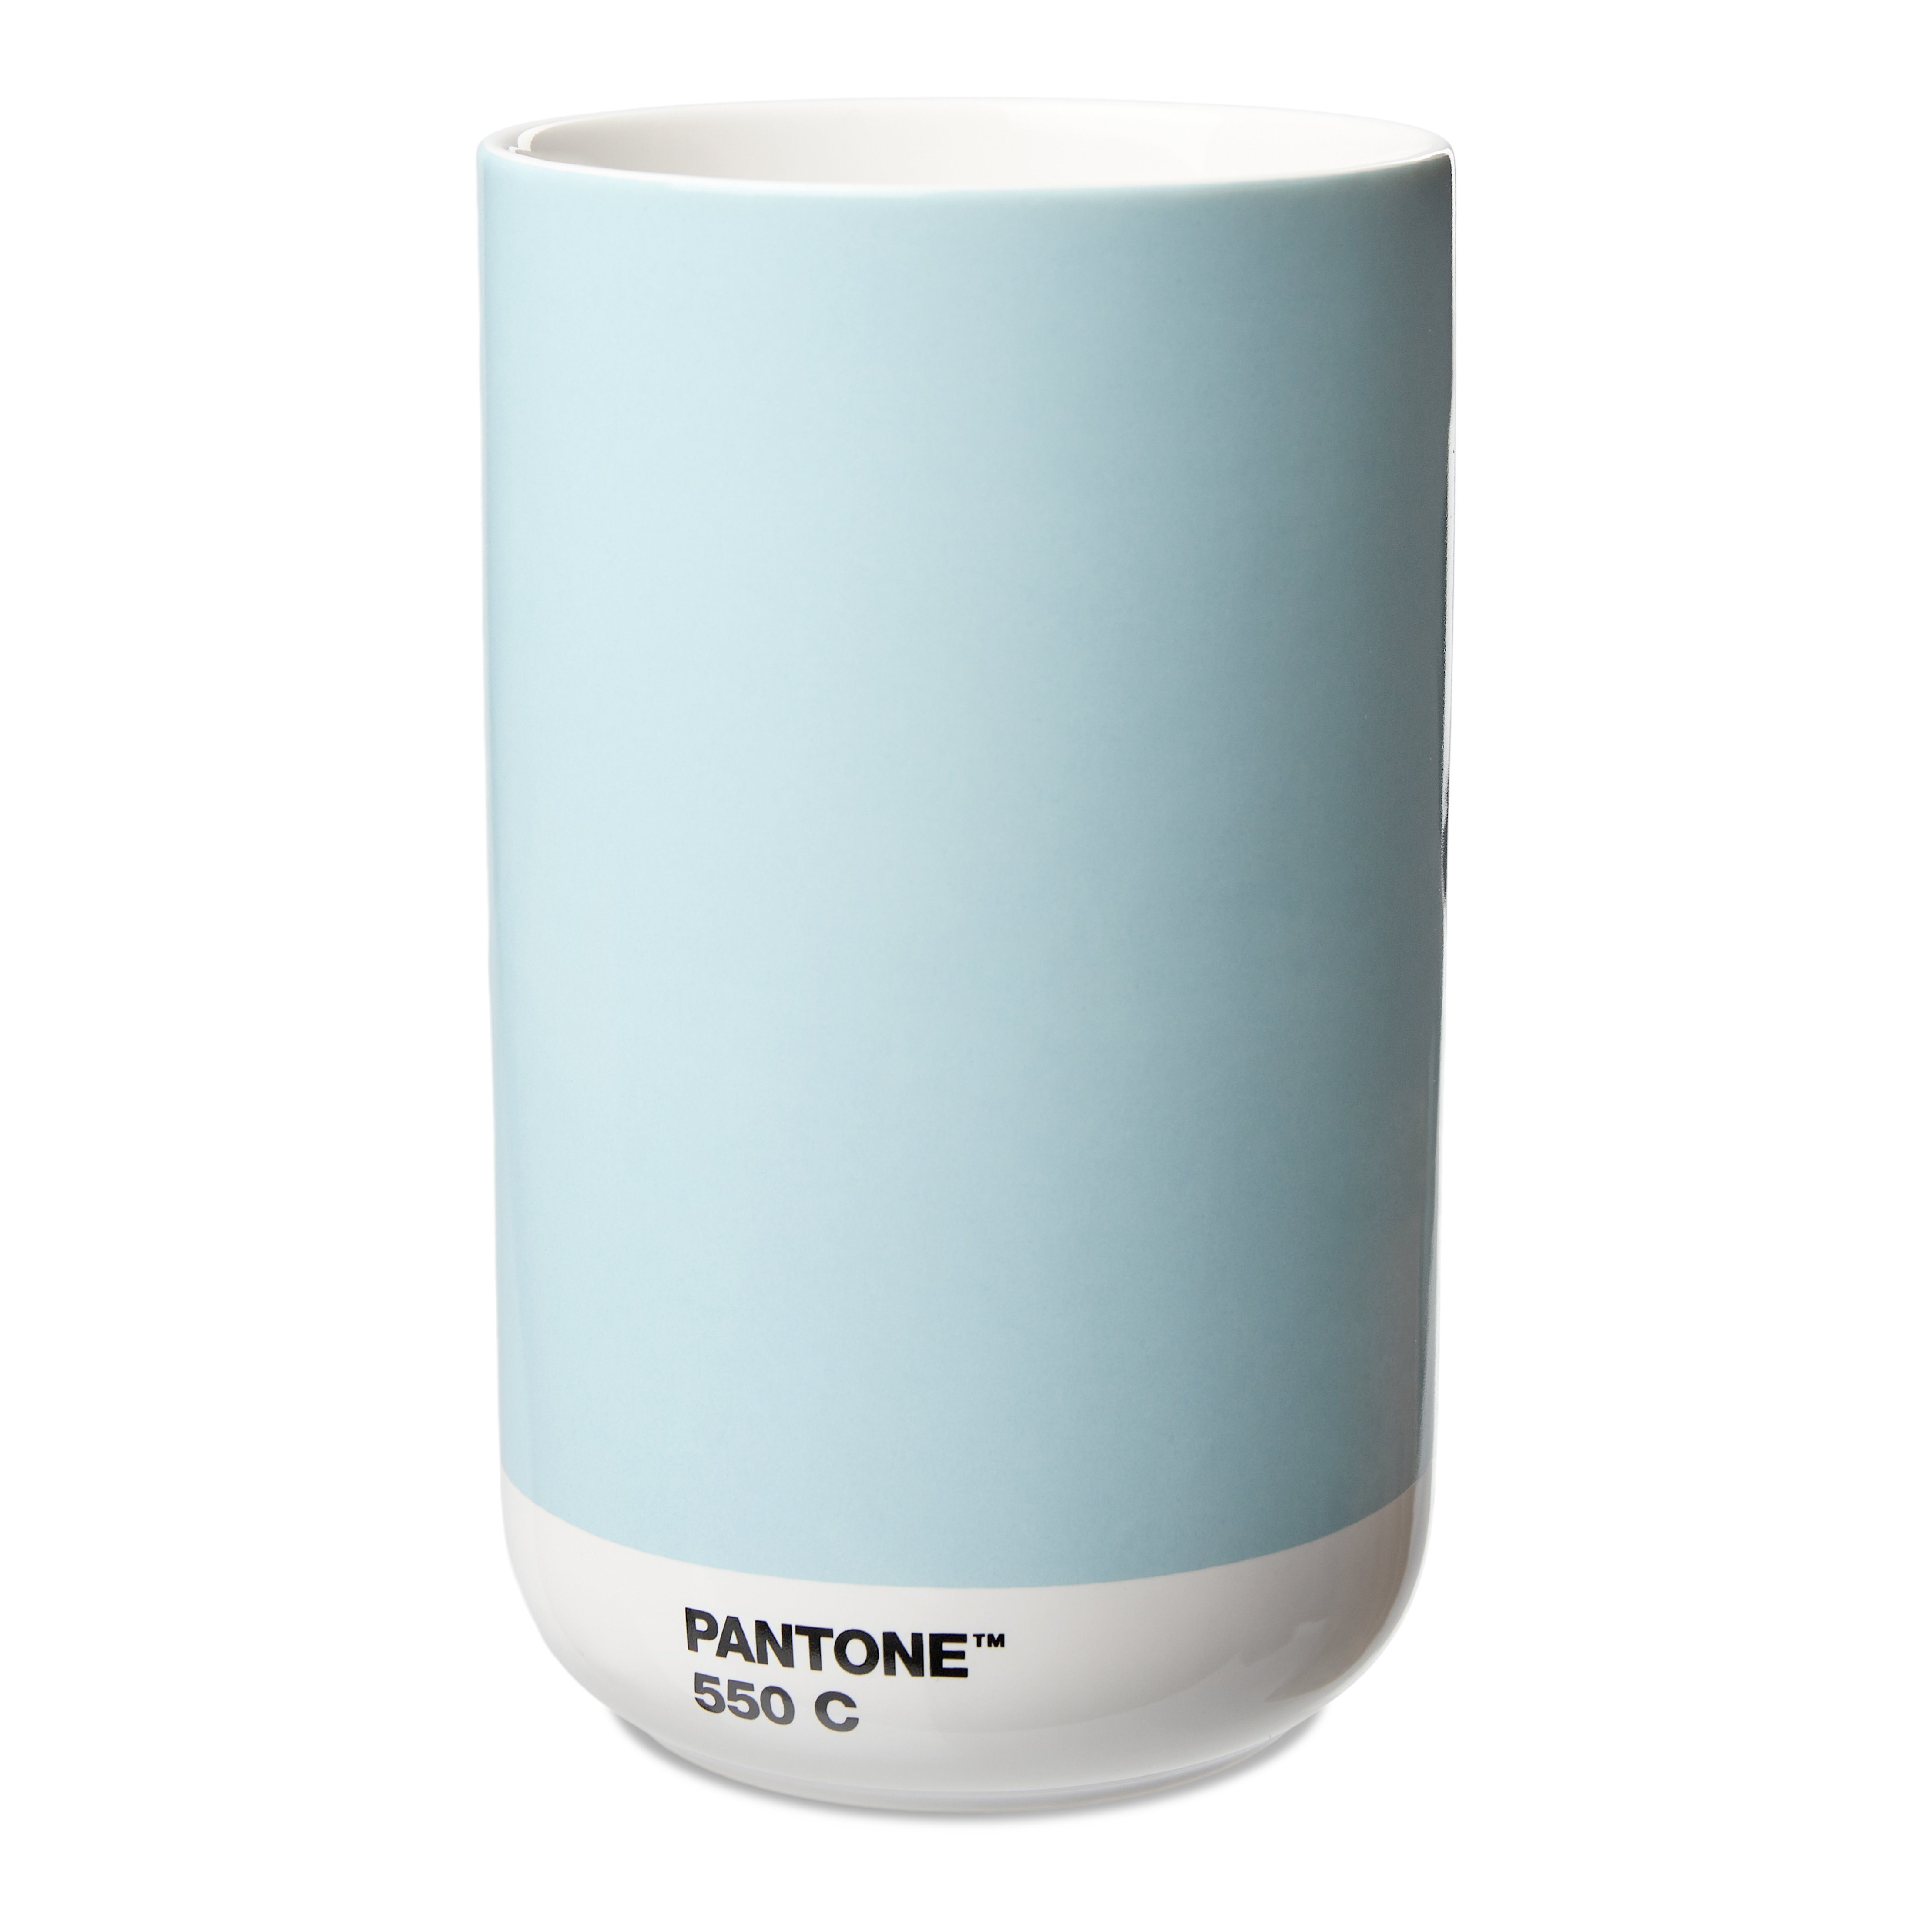 PANTONE Dekovase Mini Porzellan Vase, in Geschenkbox, 500ml Light Blue 550C